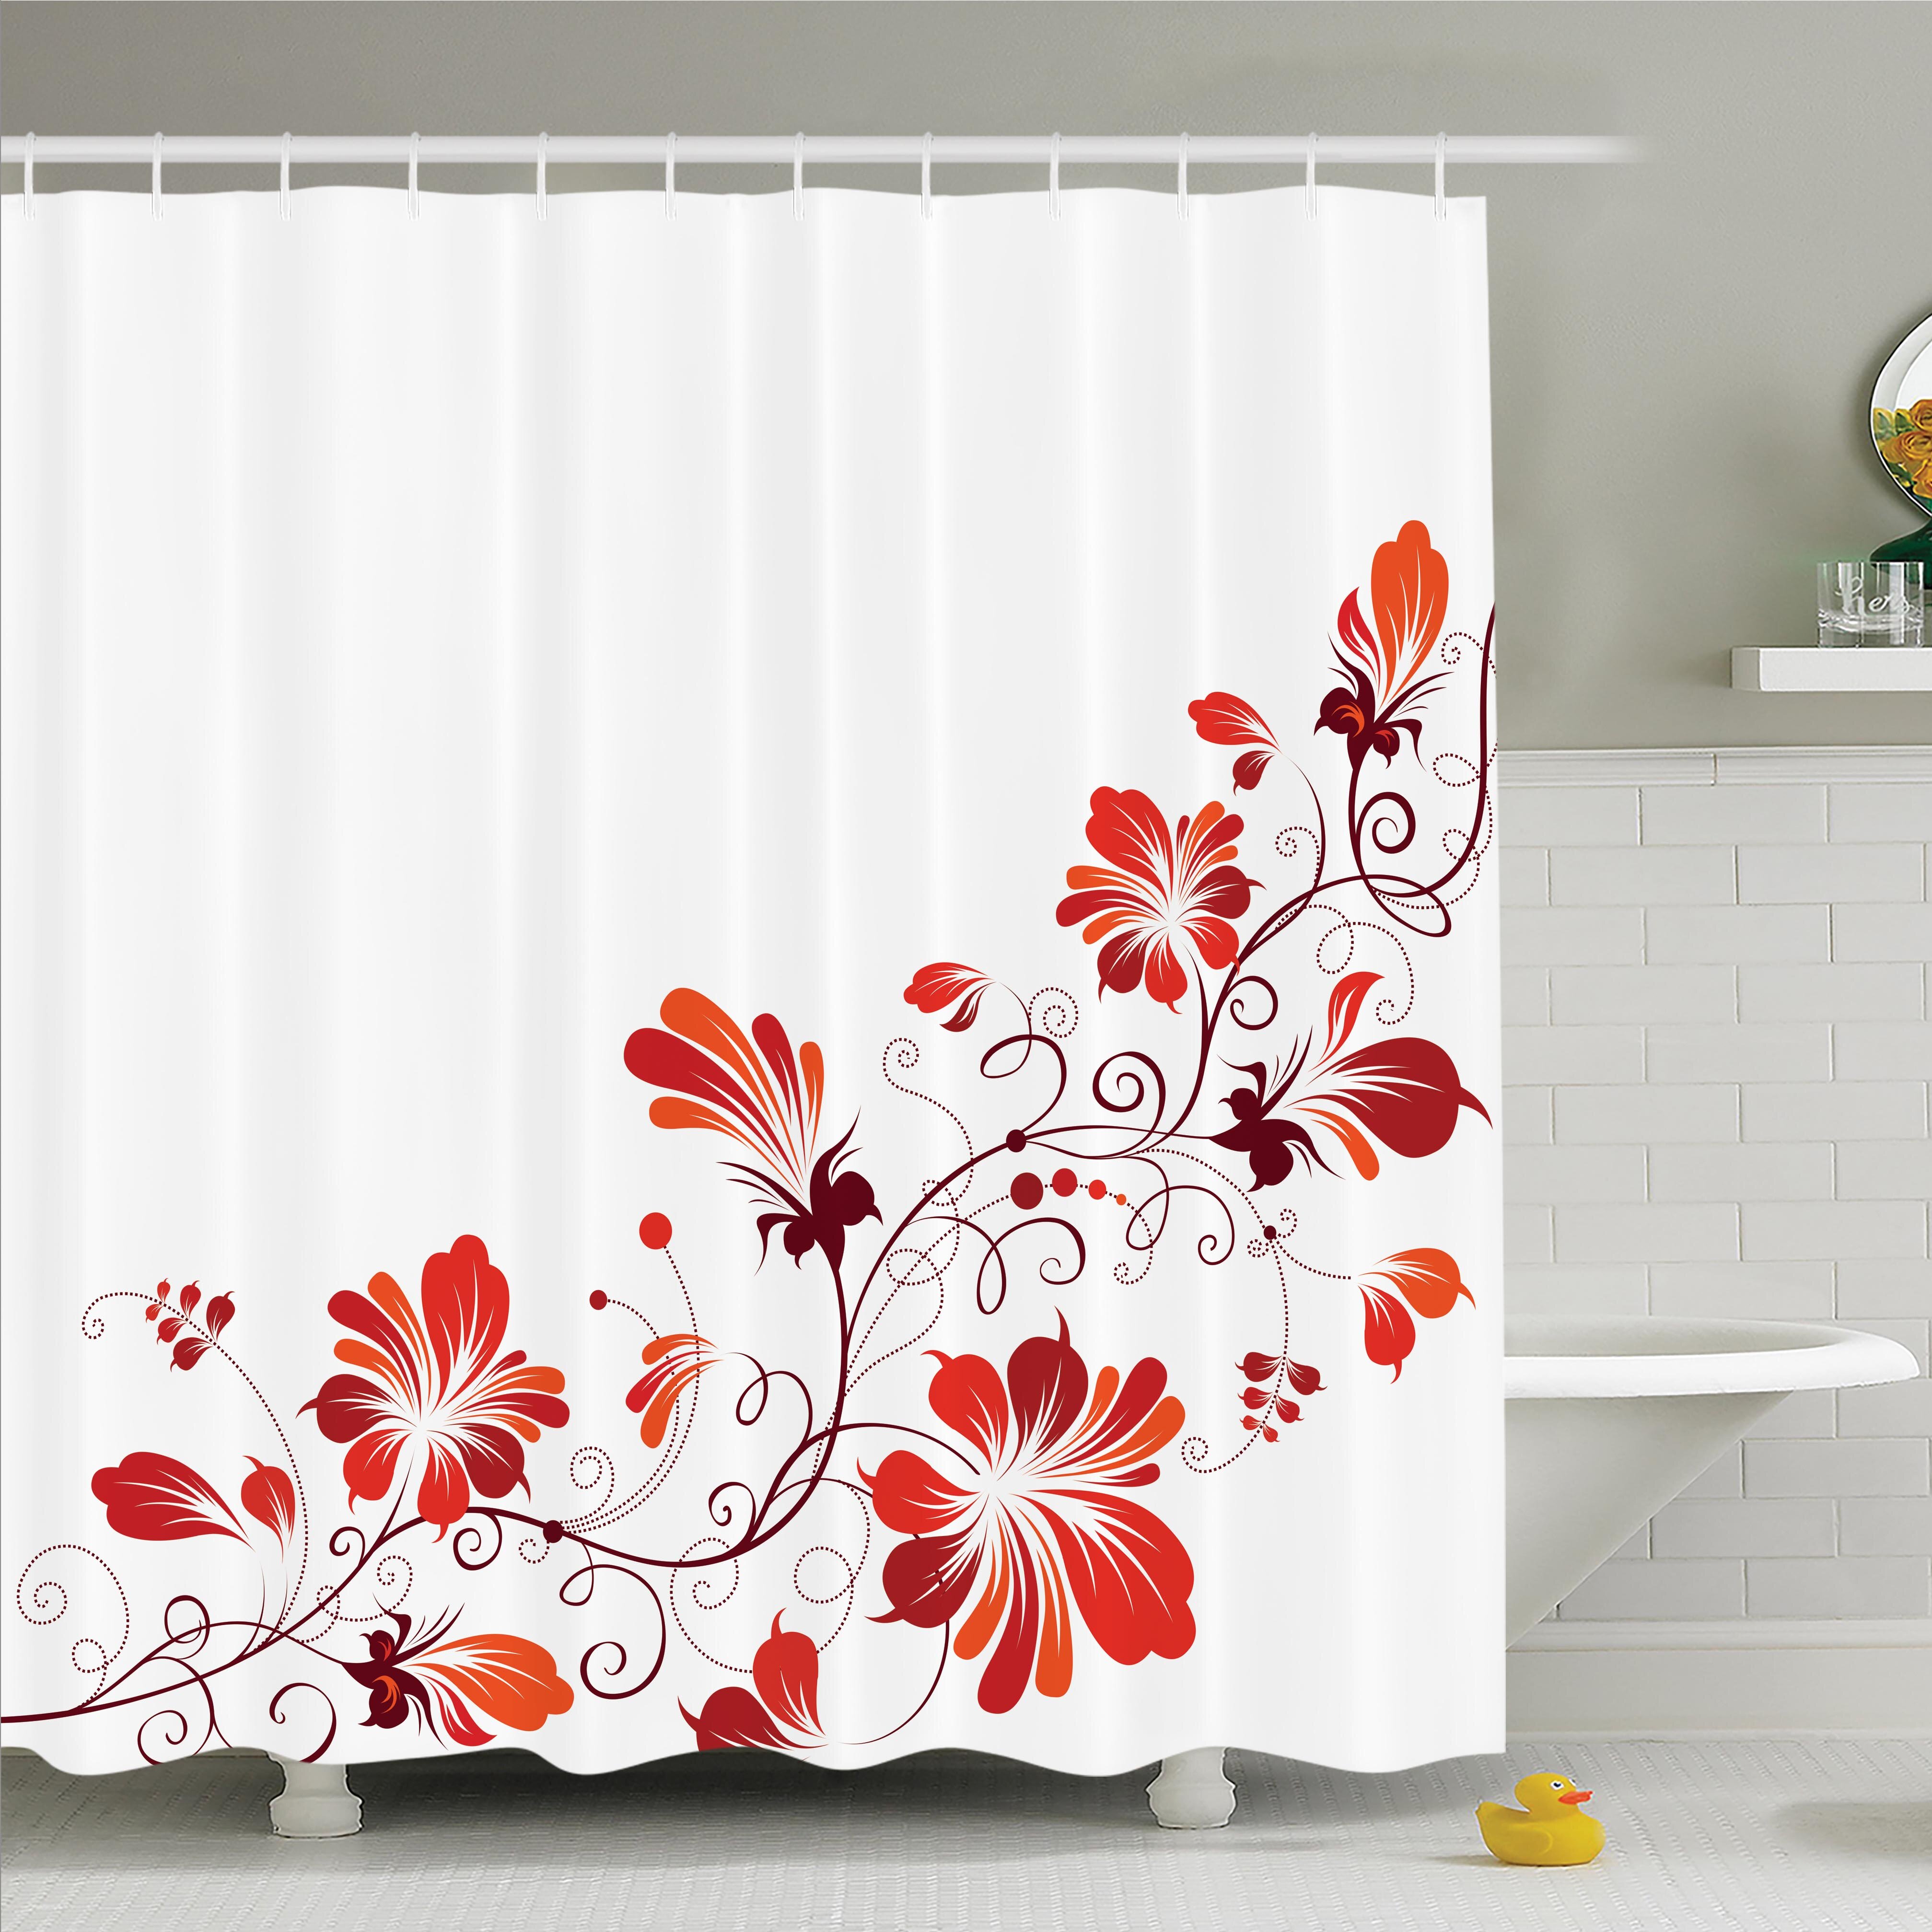 Moon Curved Waterproof Bathroom Polyester Shower Curtain Liner Water Resistant 